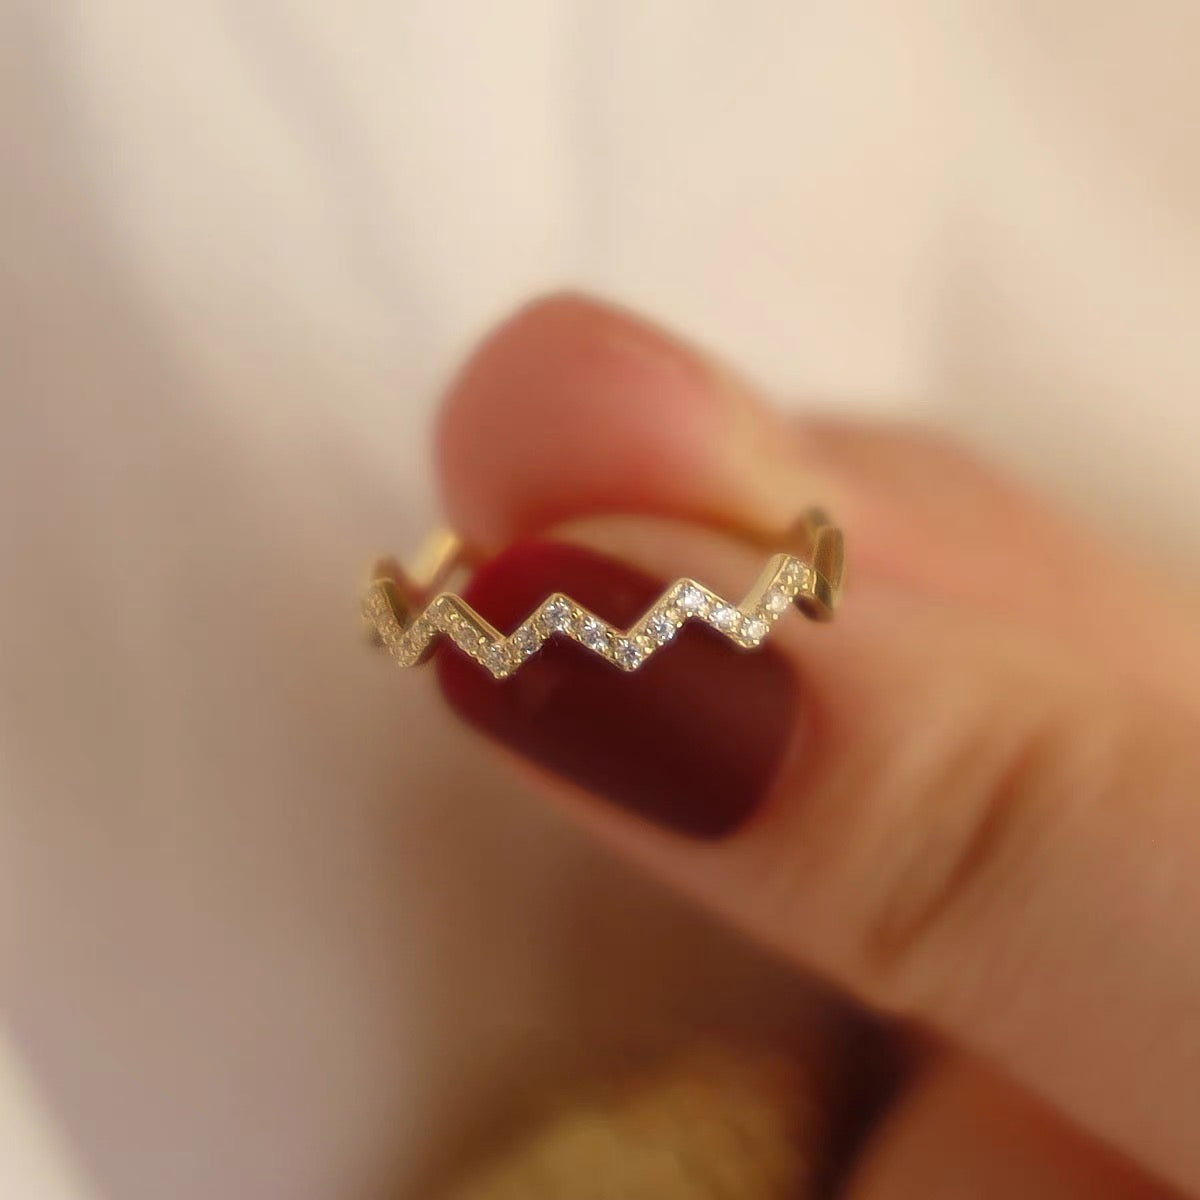 Luke Bryan's Wife Shows Off Huge New Diamond Engagement Ring